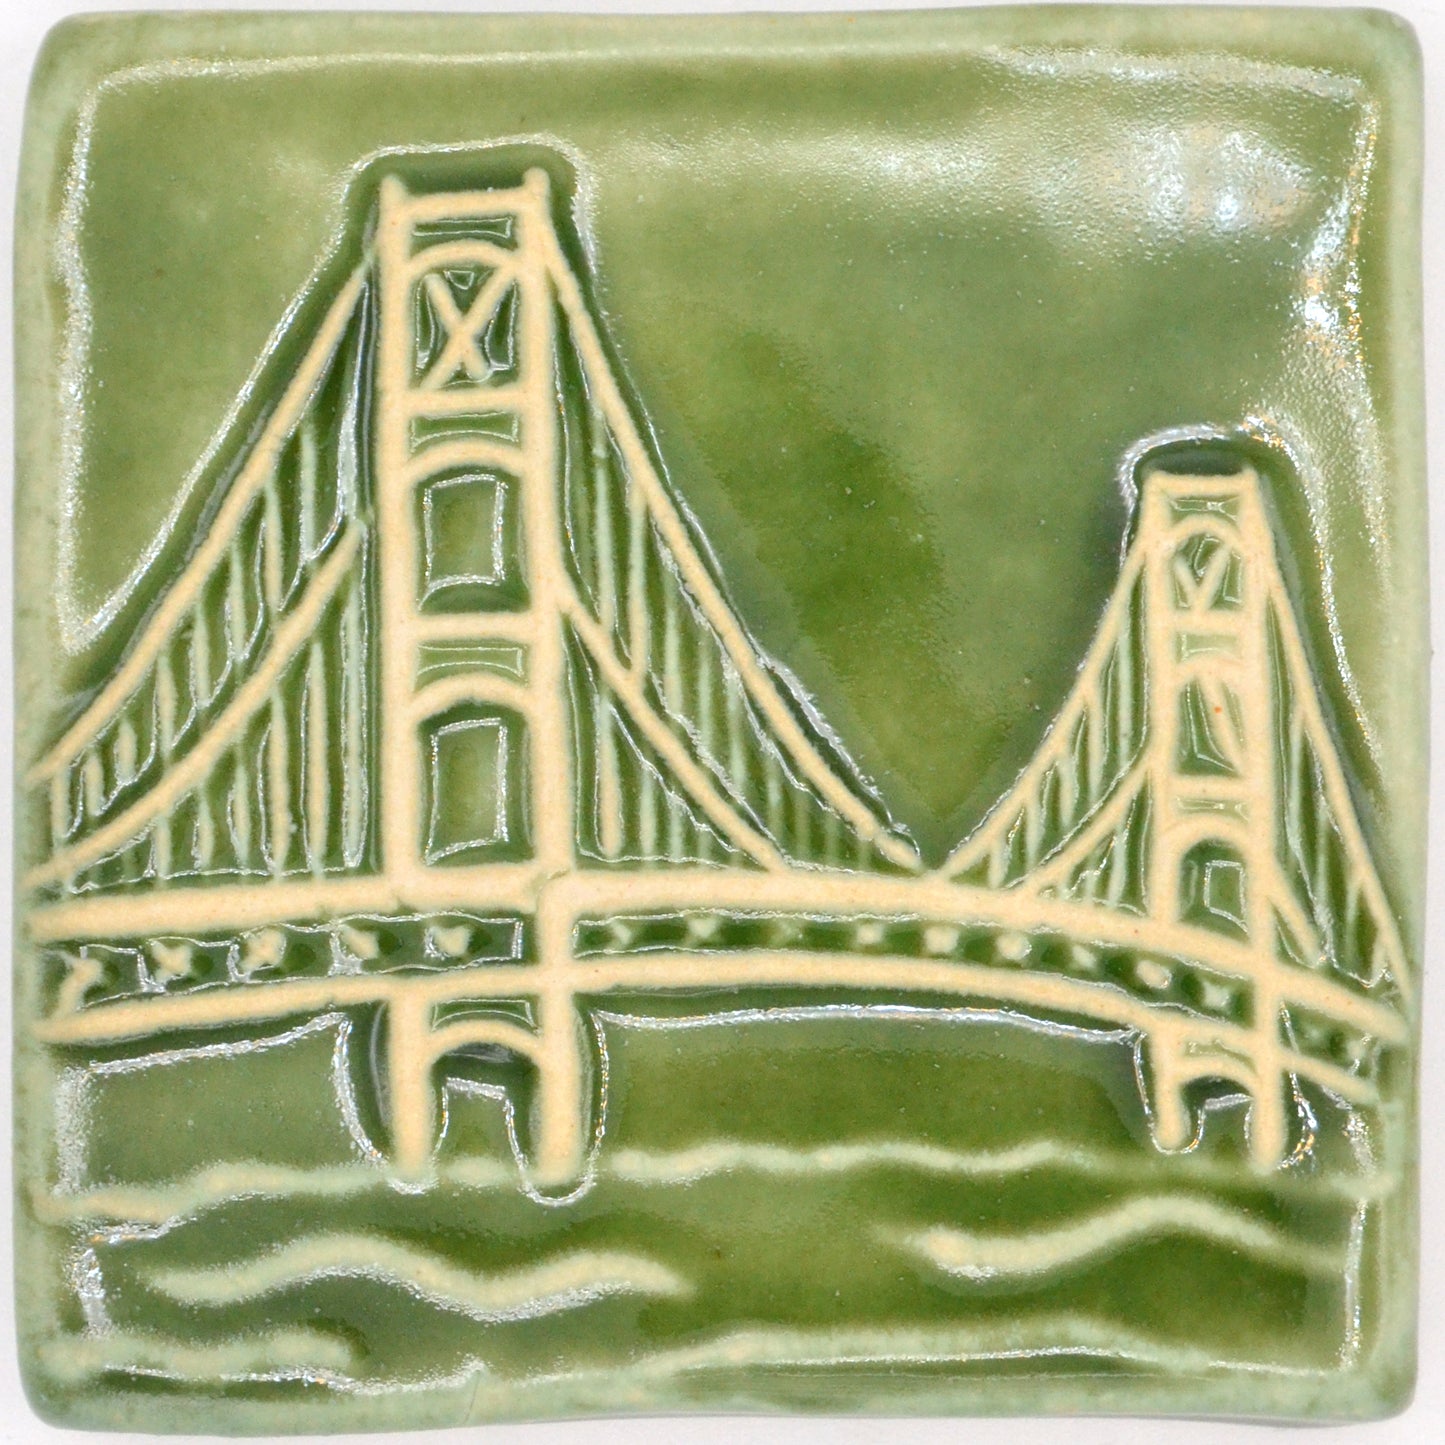 4x4 mackinac bridge tile green